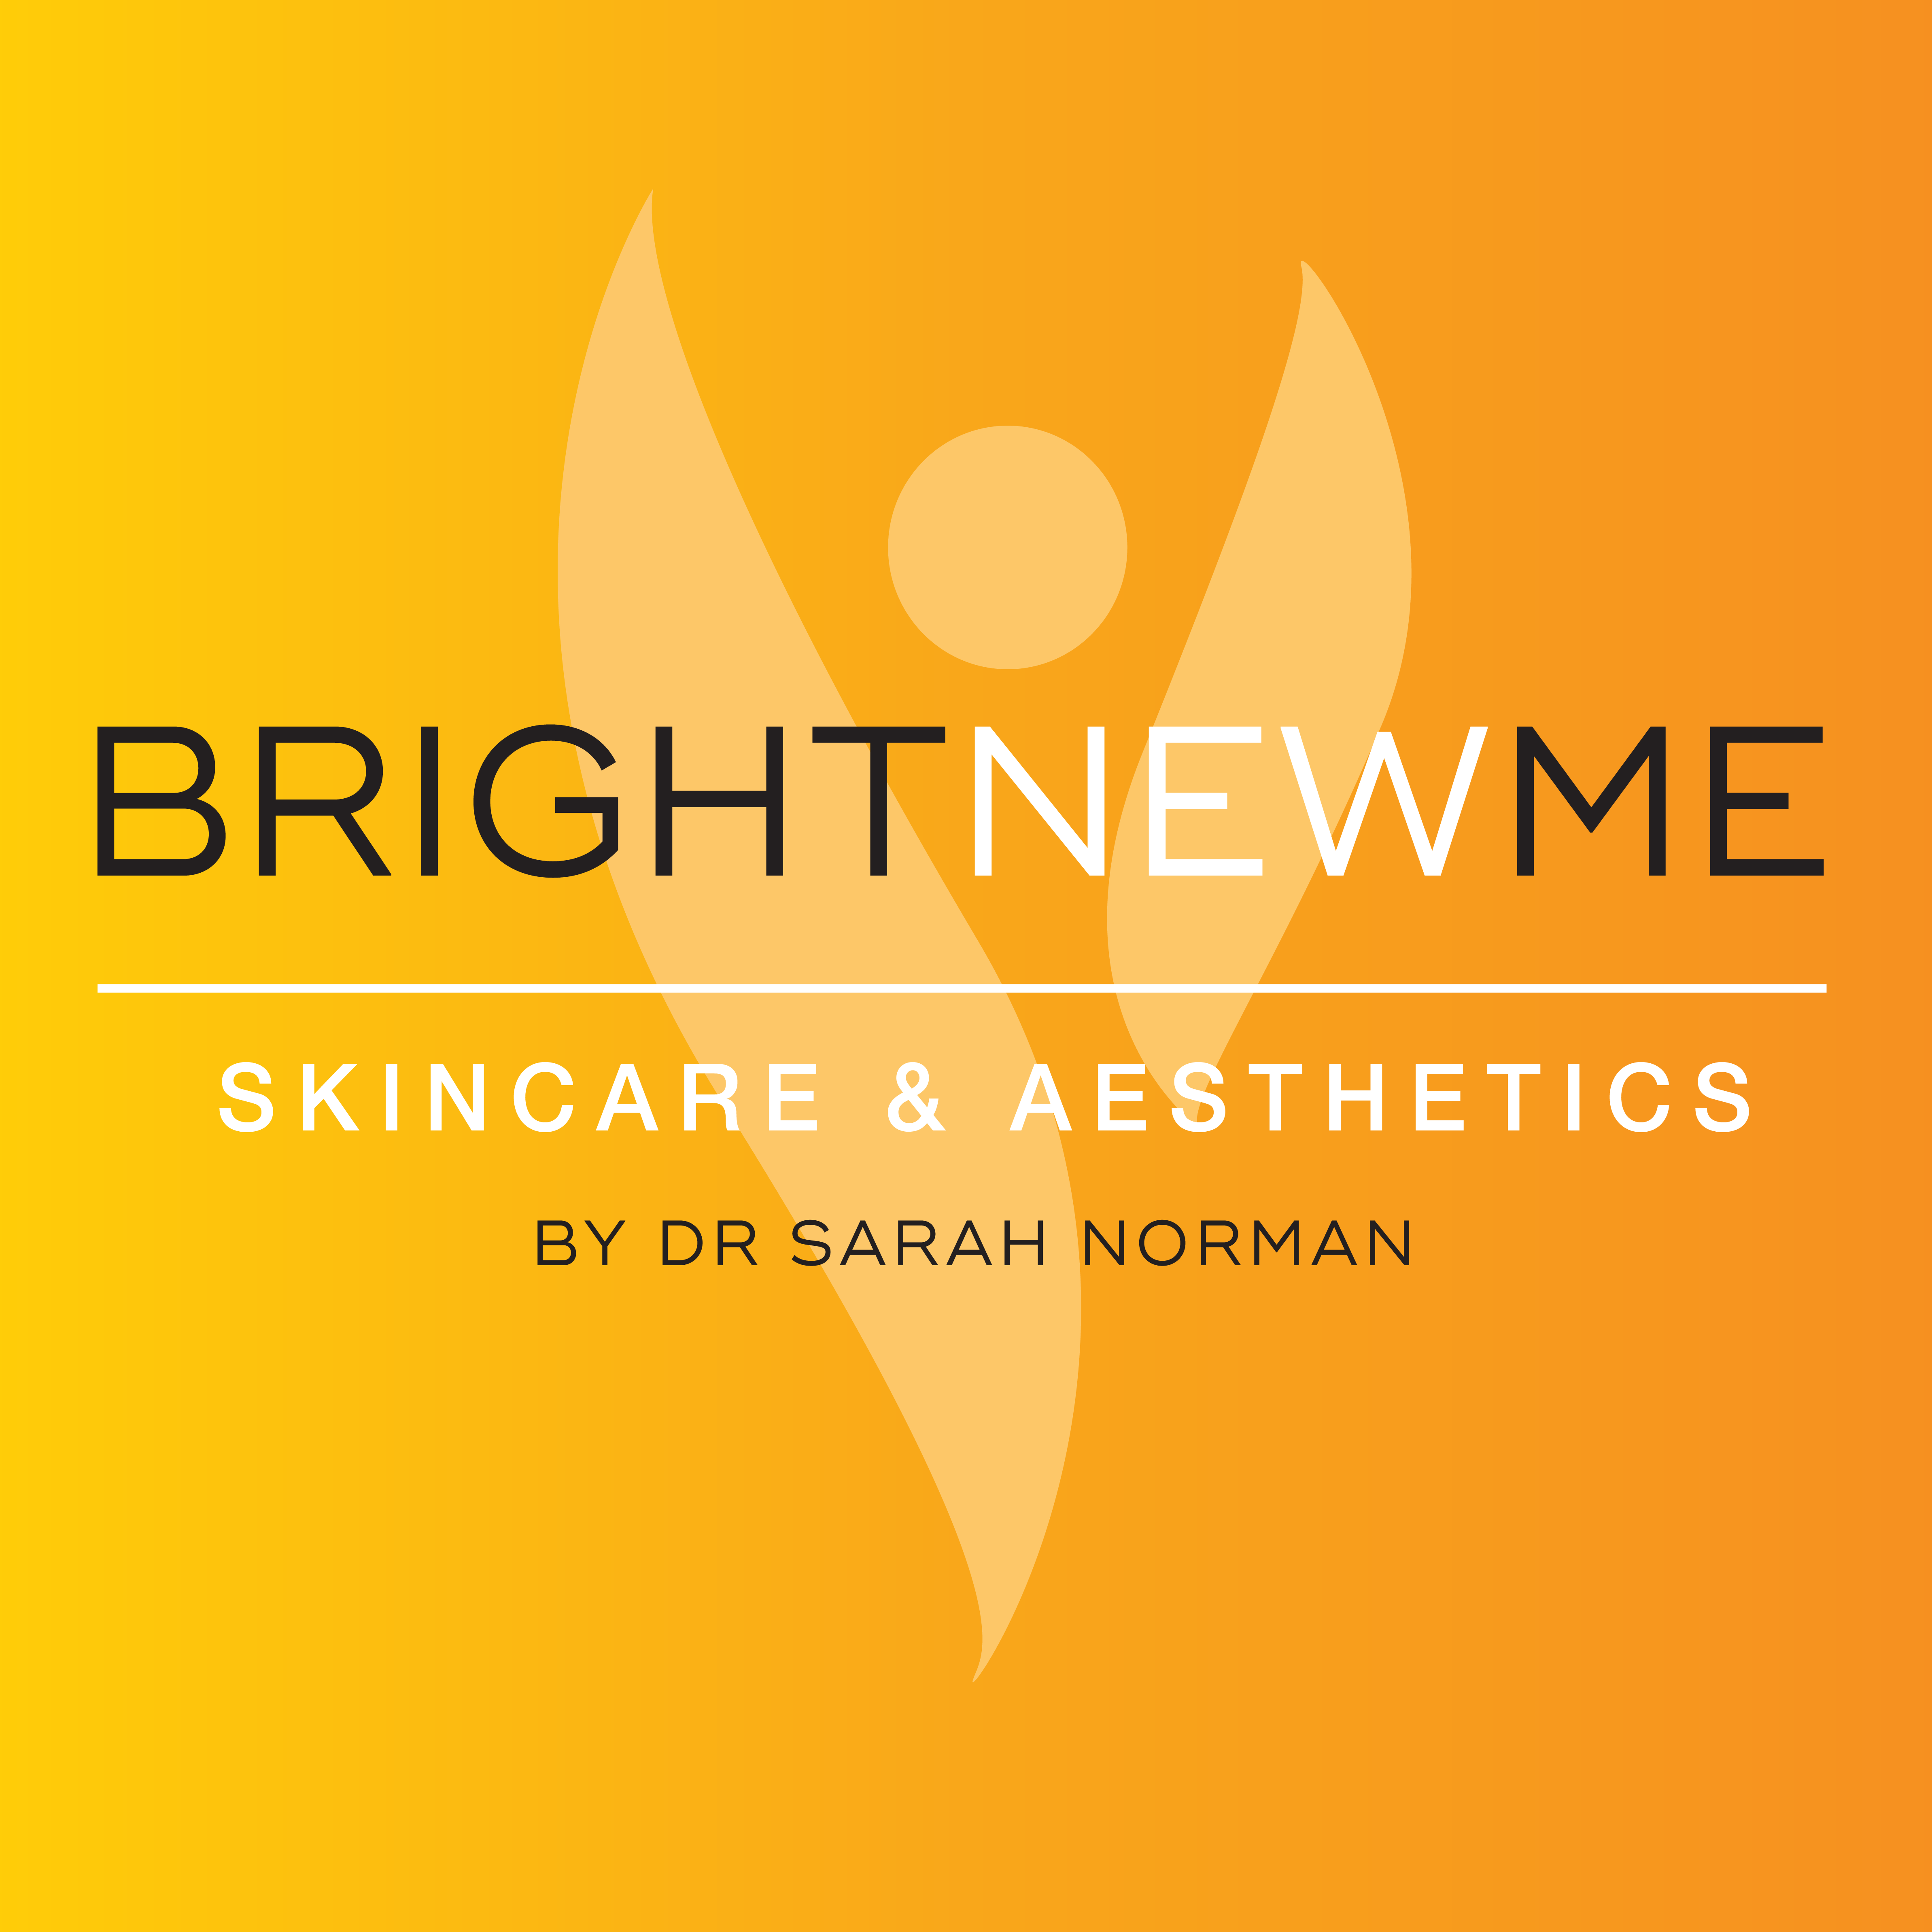 BrightNewMe, by Dr Sarah Norman